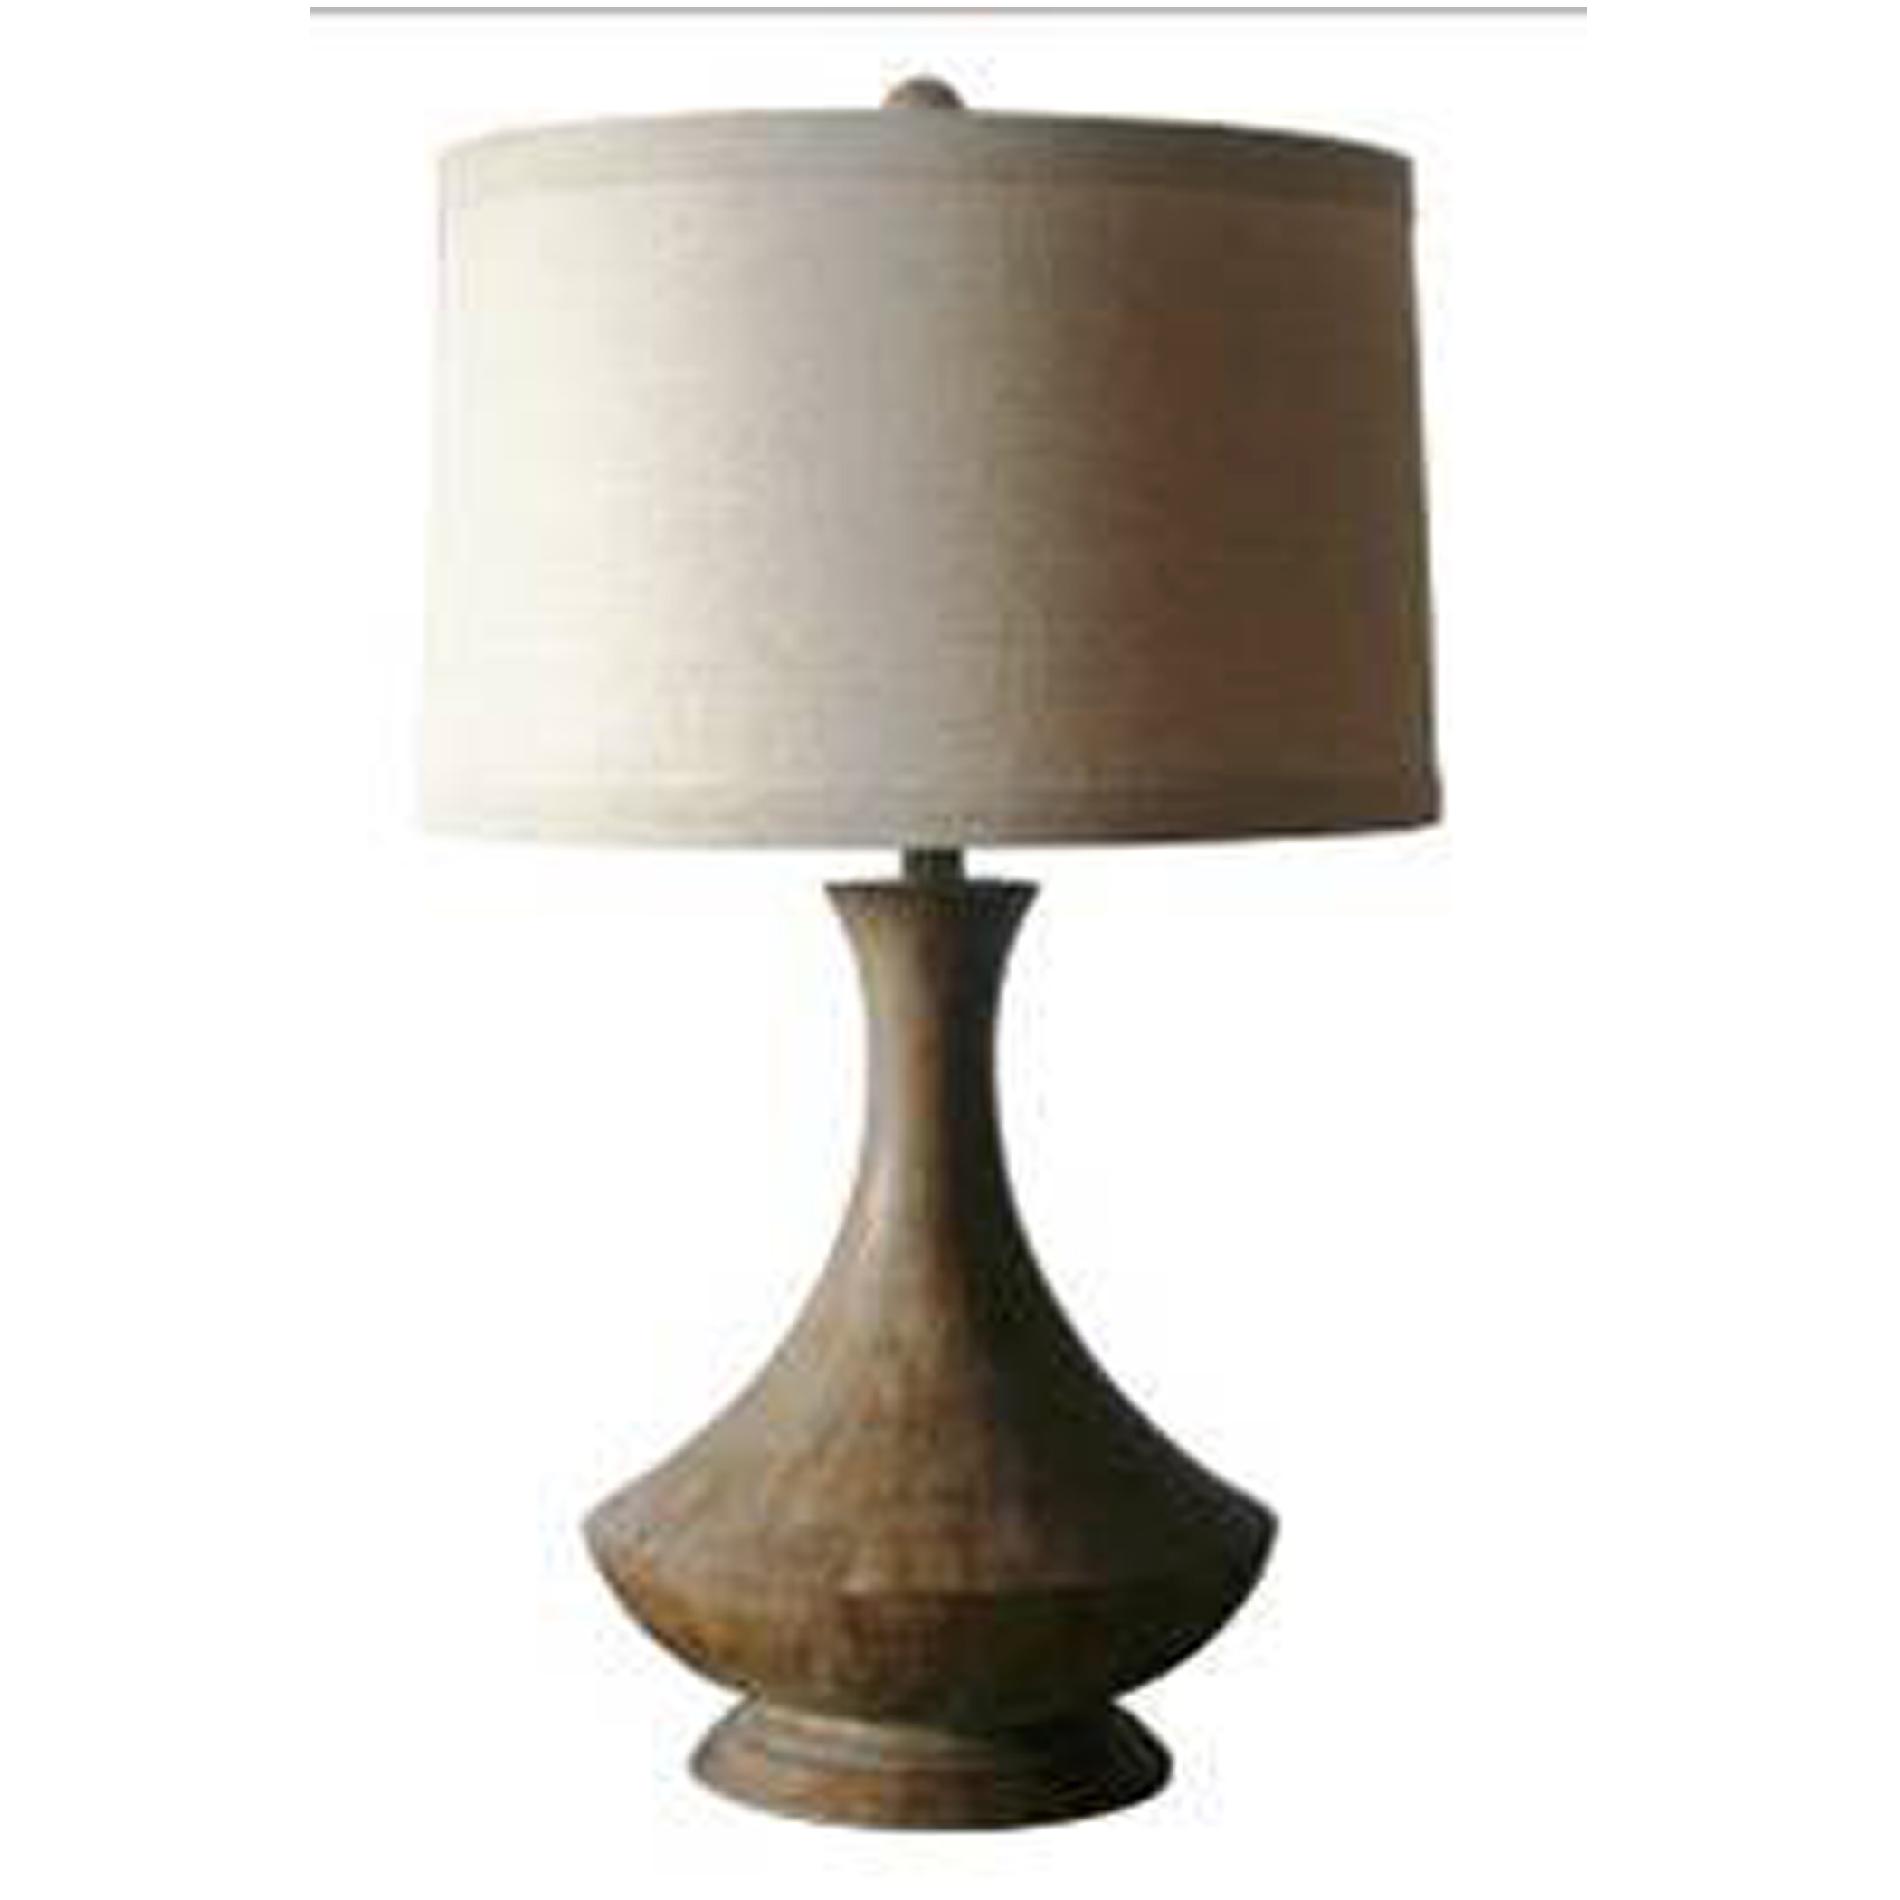 30.5" tall resin table lamp. (#6152)